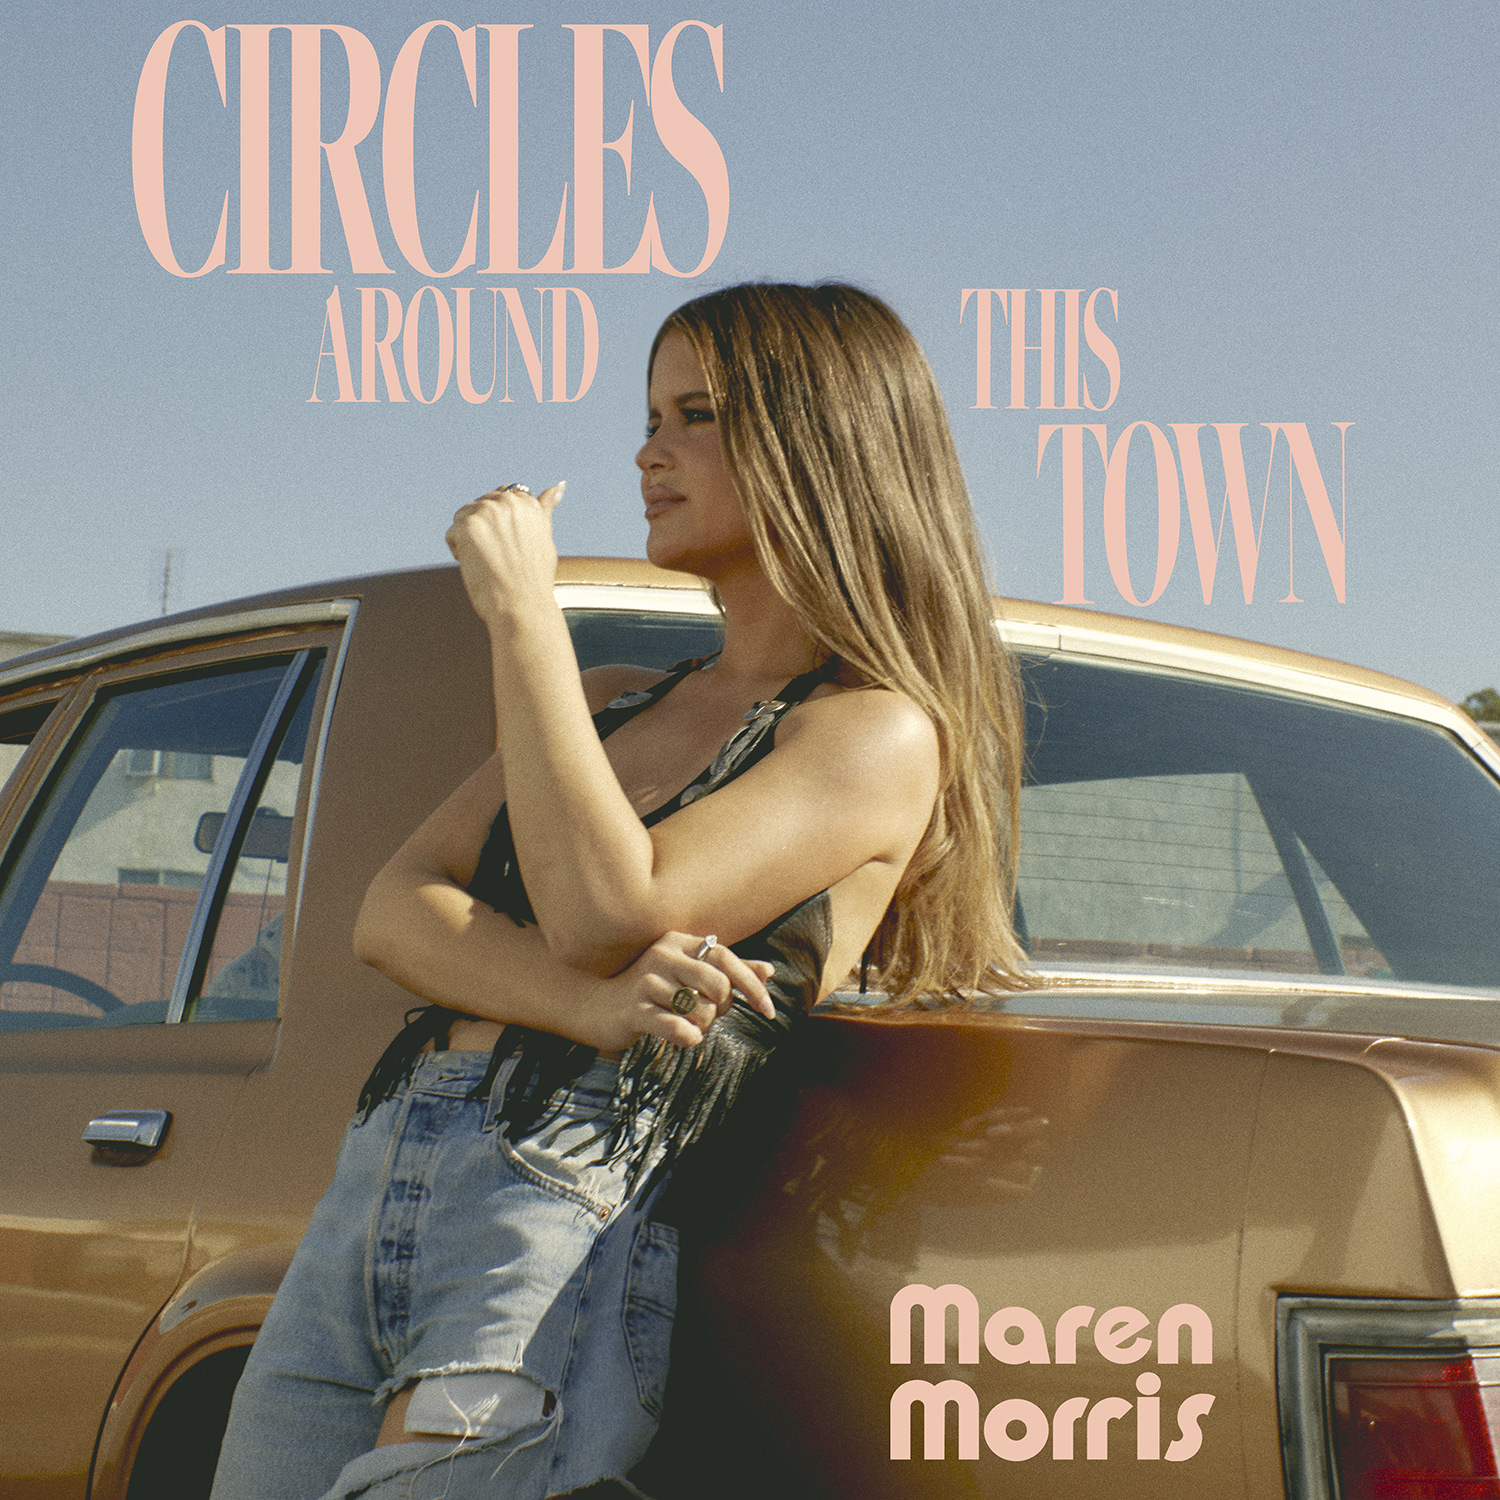 Maren Morris
‘Circles Around This Town’
